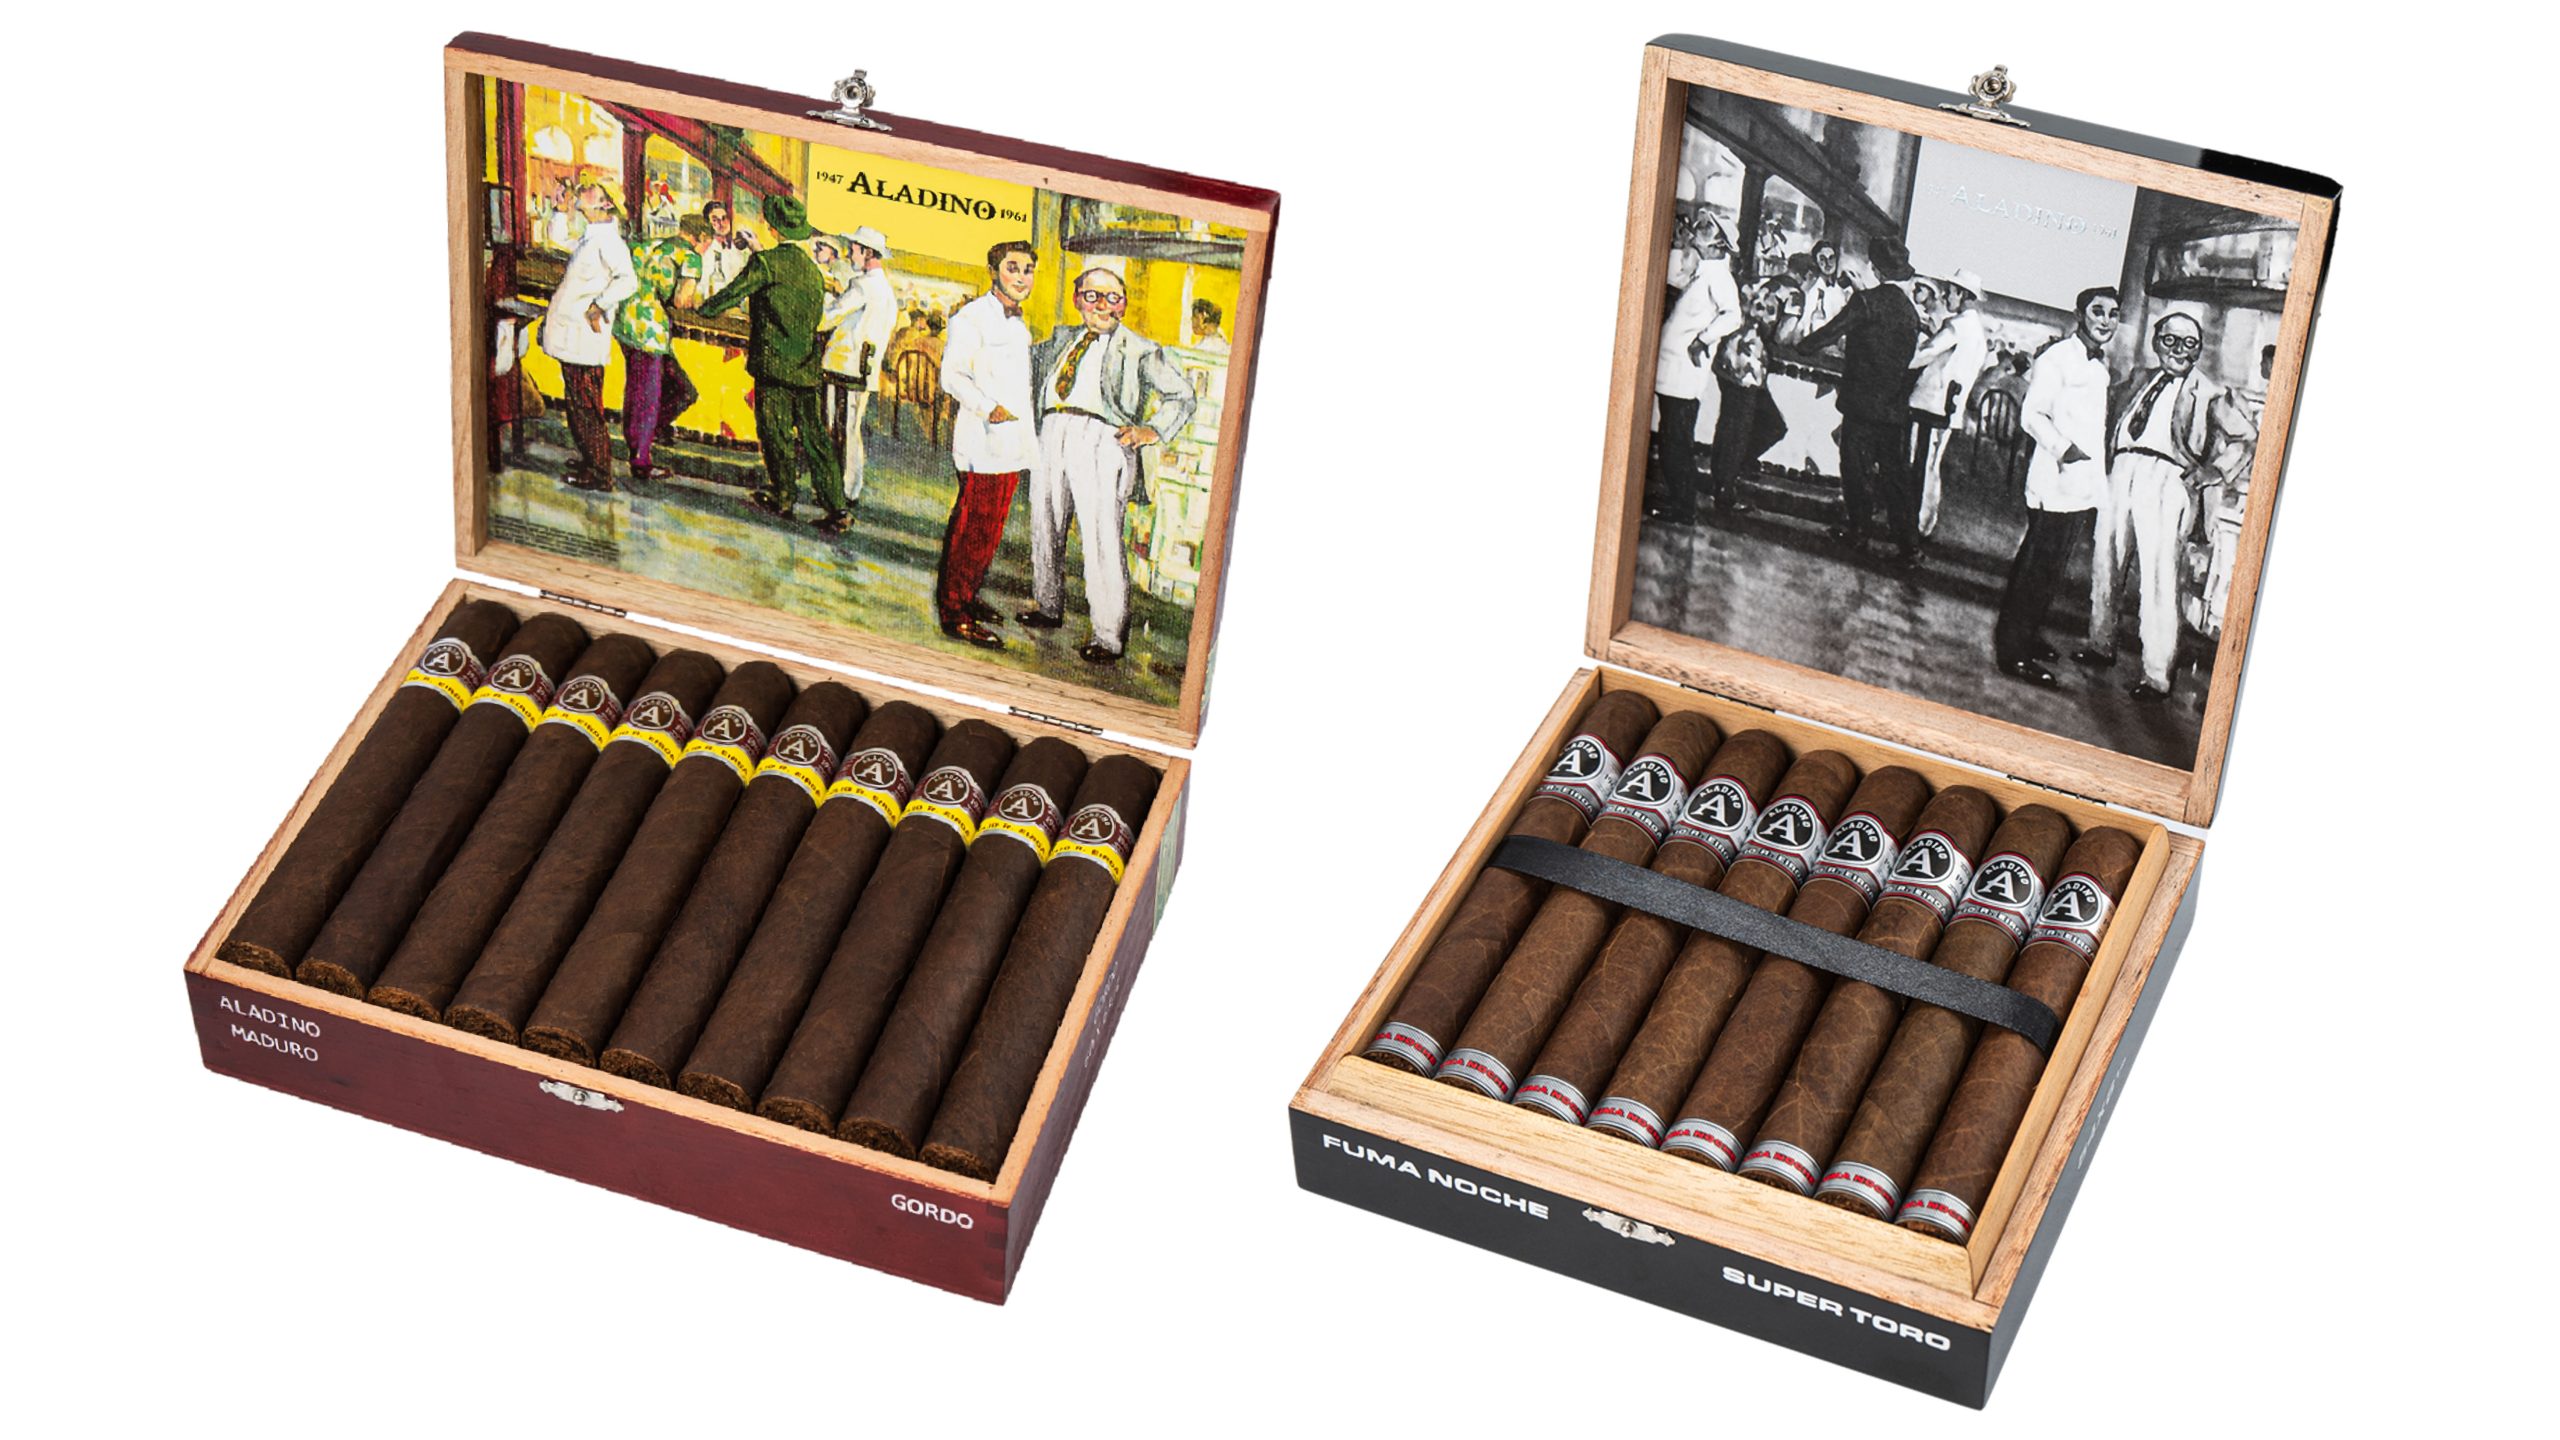 Aladino Cigars Expands Portfolio with Maduro Gordo and Fuma Noche Launches